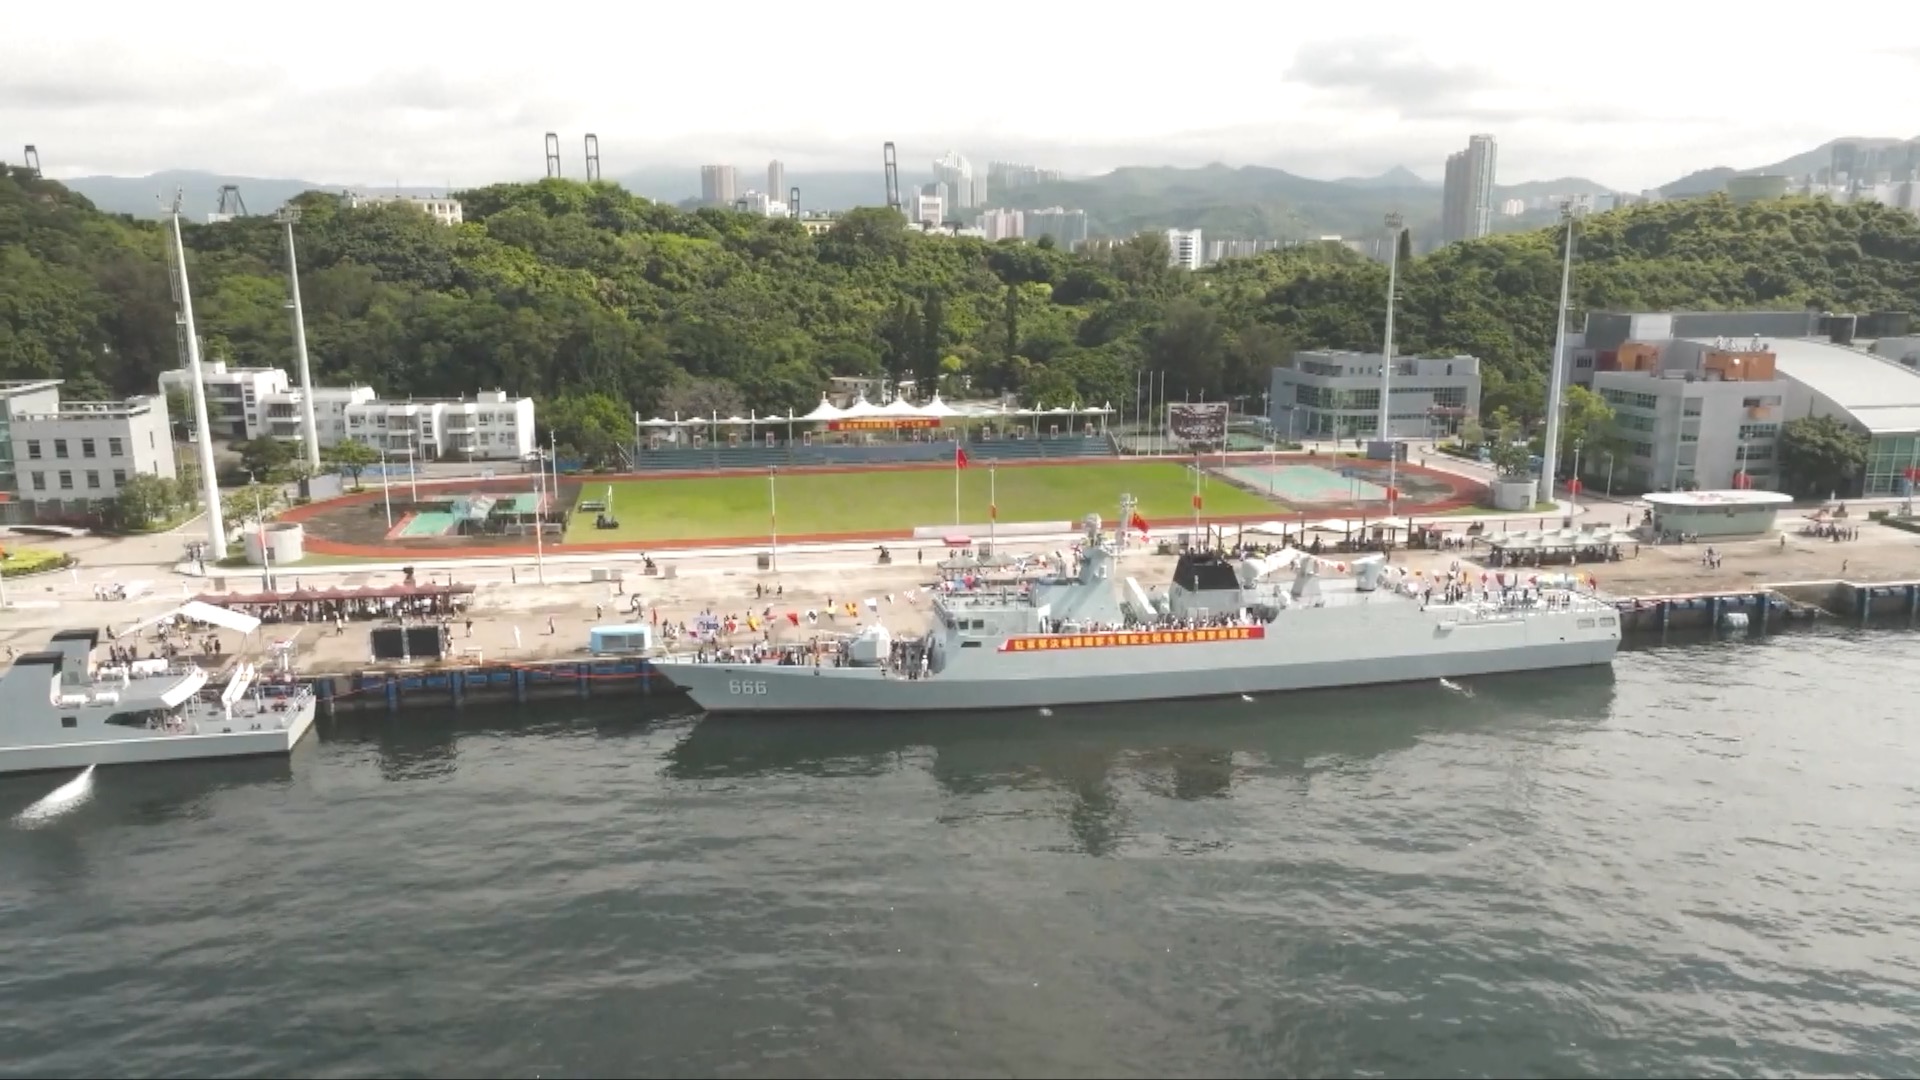 PLA garrison in Hong Kong holds open day activities